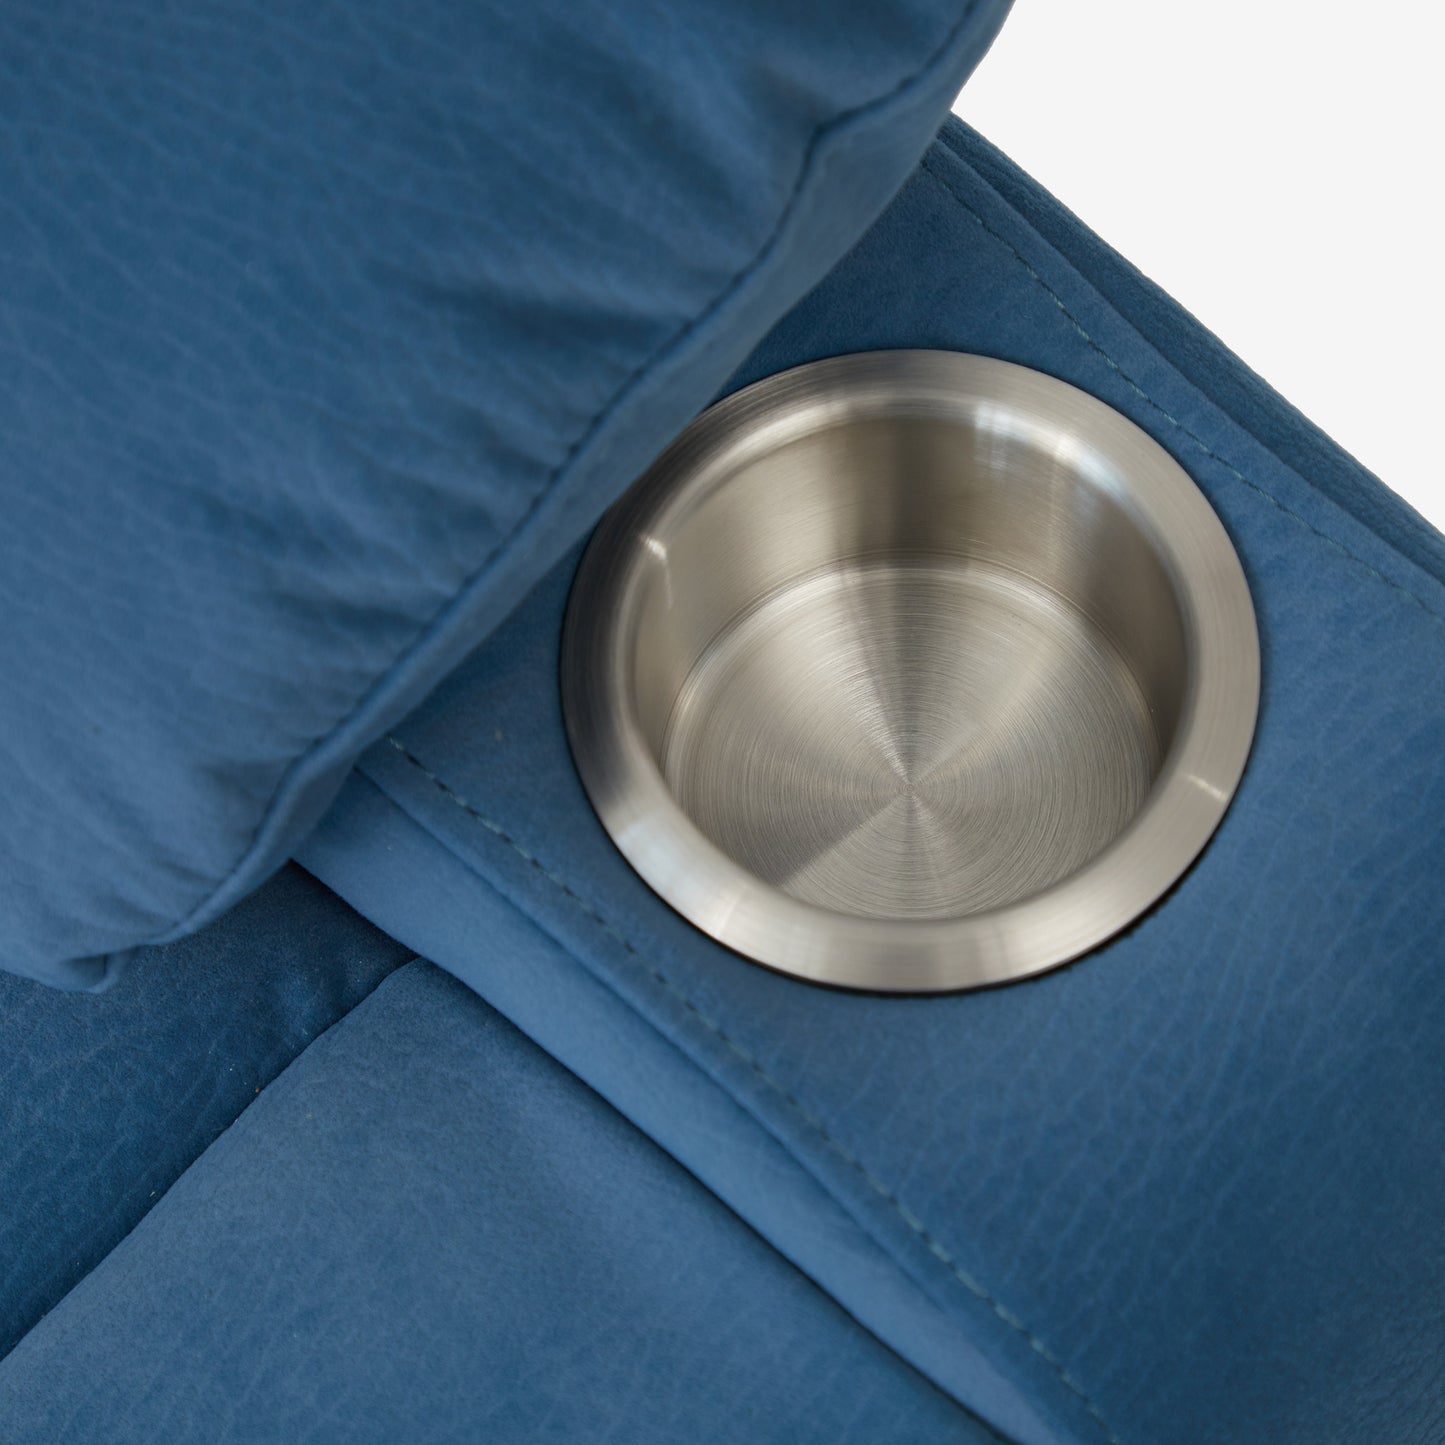 Blue Power Lift Recliner - Full Lay Flat Cup Holder Heating & Massage